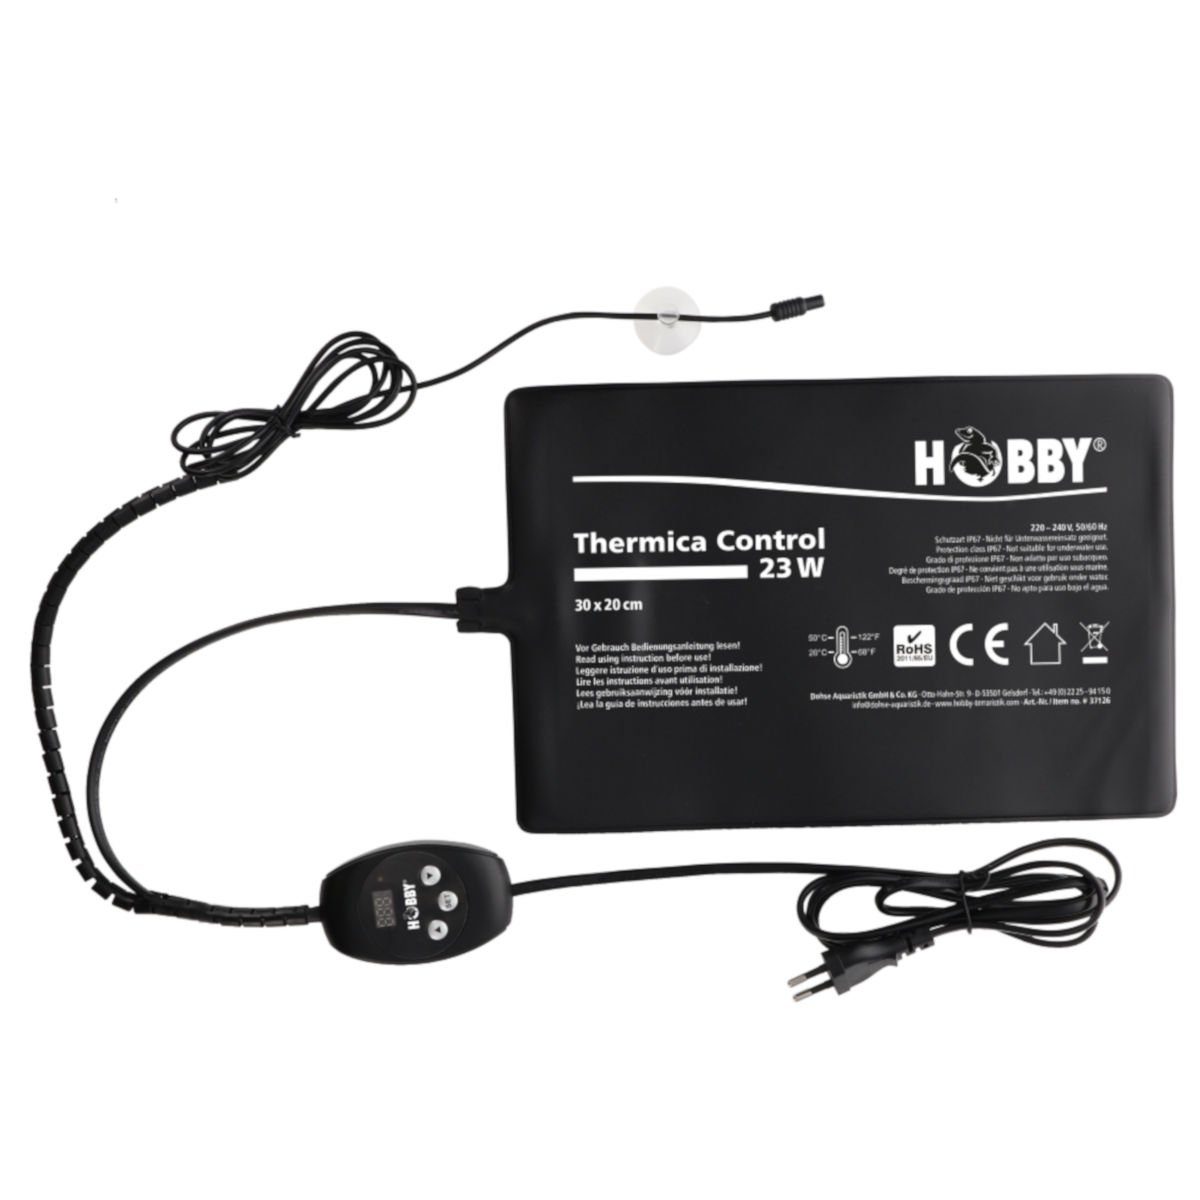 HOBBY Heizmatten Thermica Control 23 W - Heizmatte mit digitalem Controller